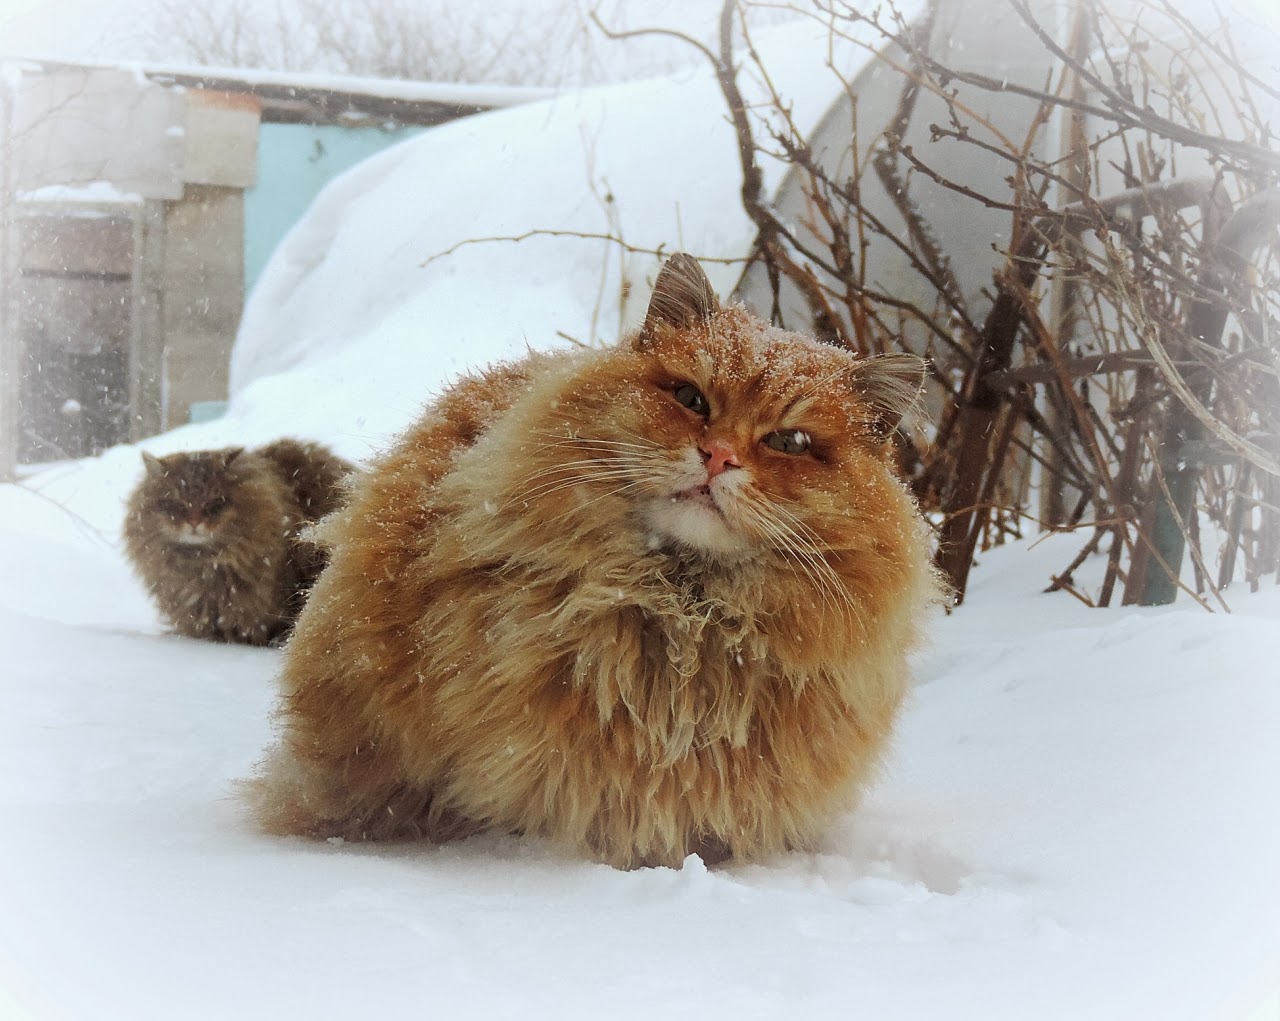 Siberian Cats